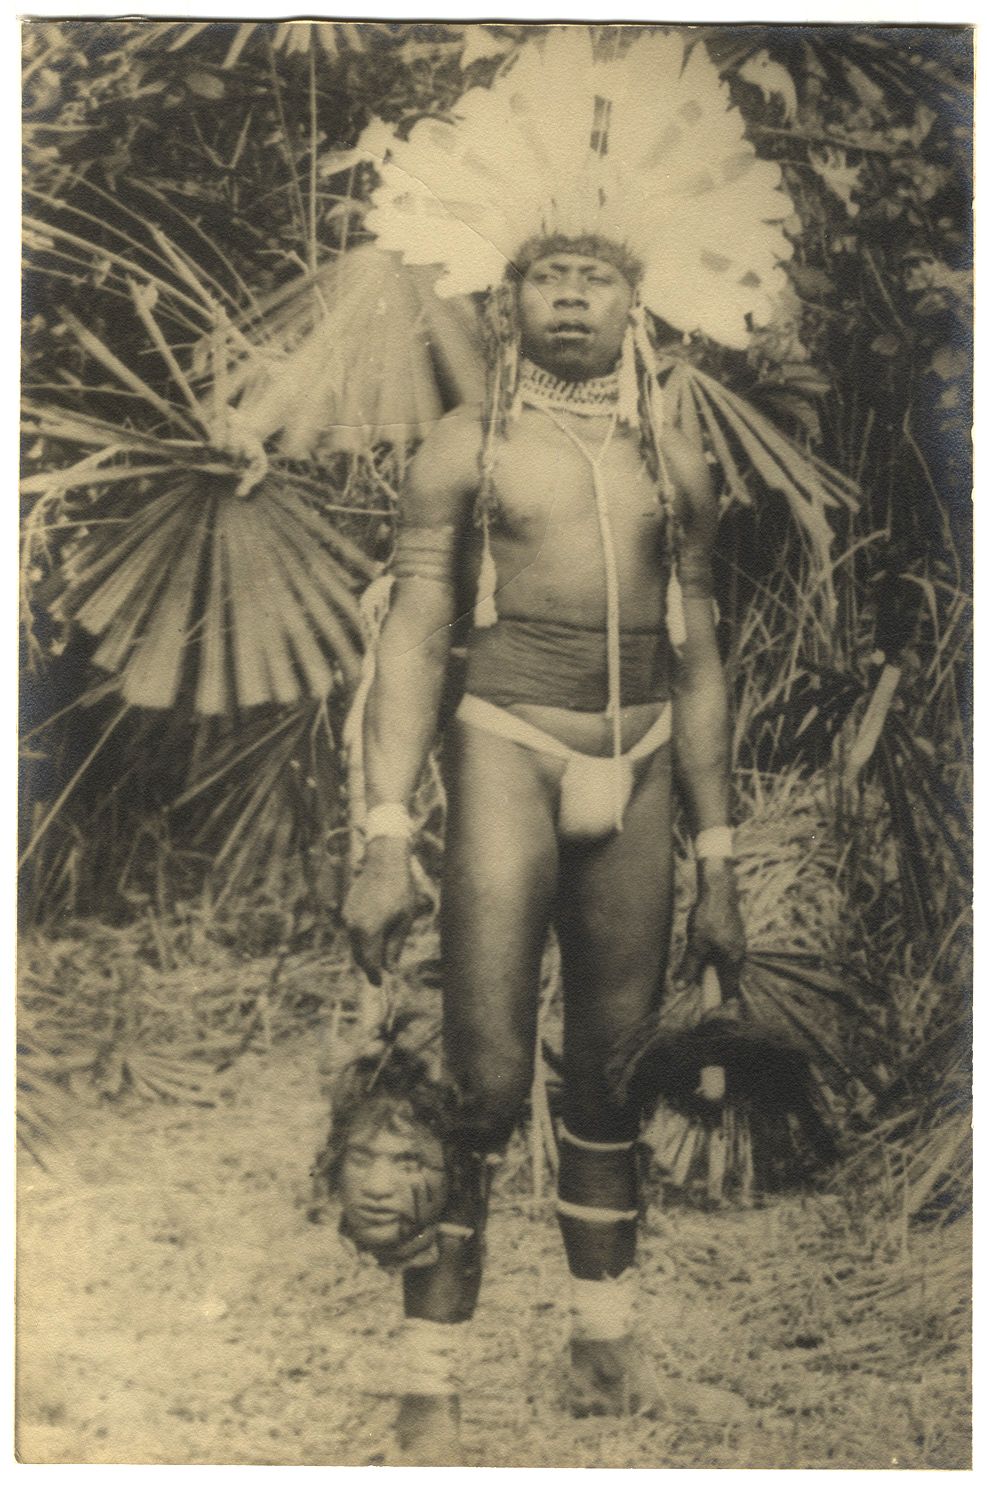 Null 瓜达尔卡纳尔[不明摄影师]：食人族肖像，1939 年。银底片，33.5 x 22.5 厘米。用胶纸装裱在卡片上。背面有注释。